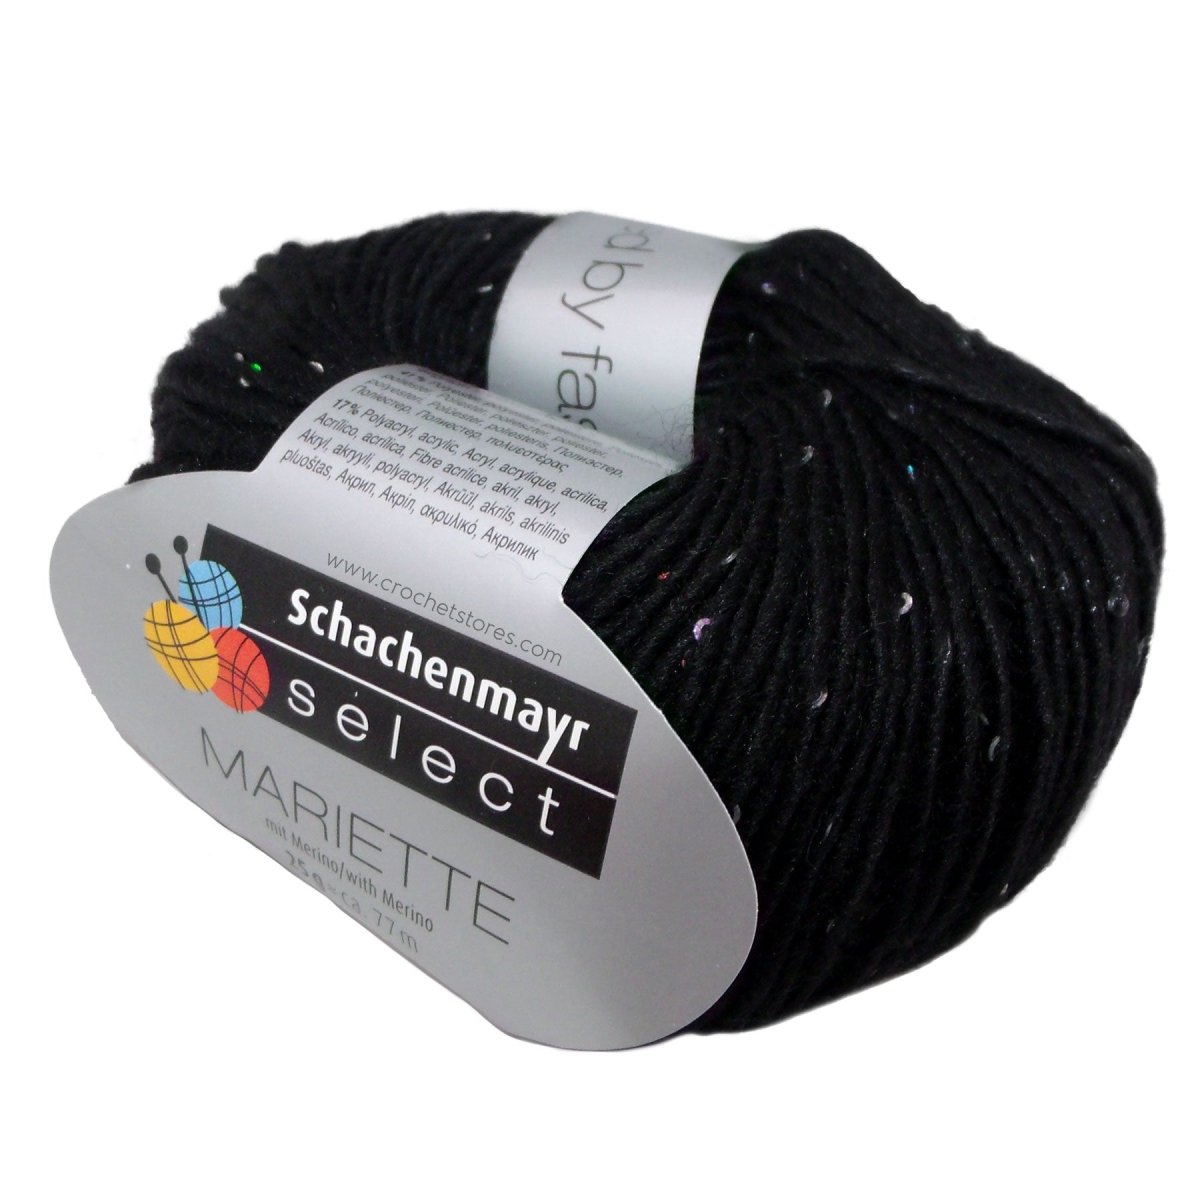 MARIETTE - Crochetstores9811781-81144053859050098